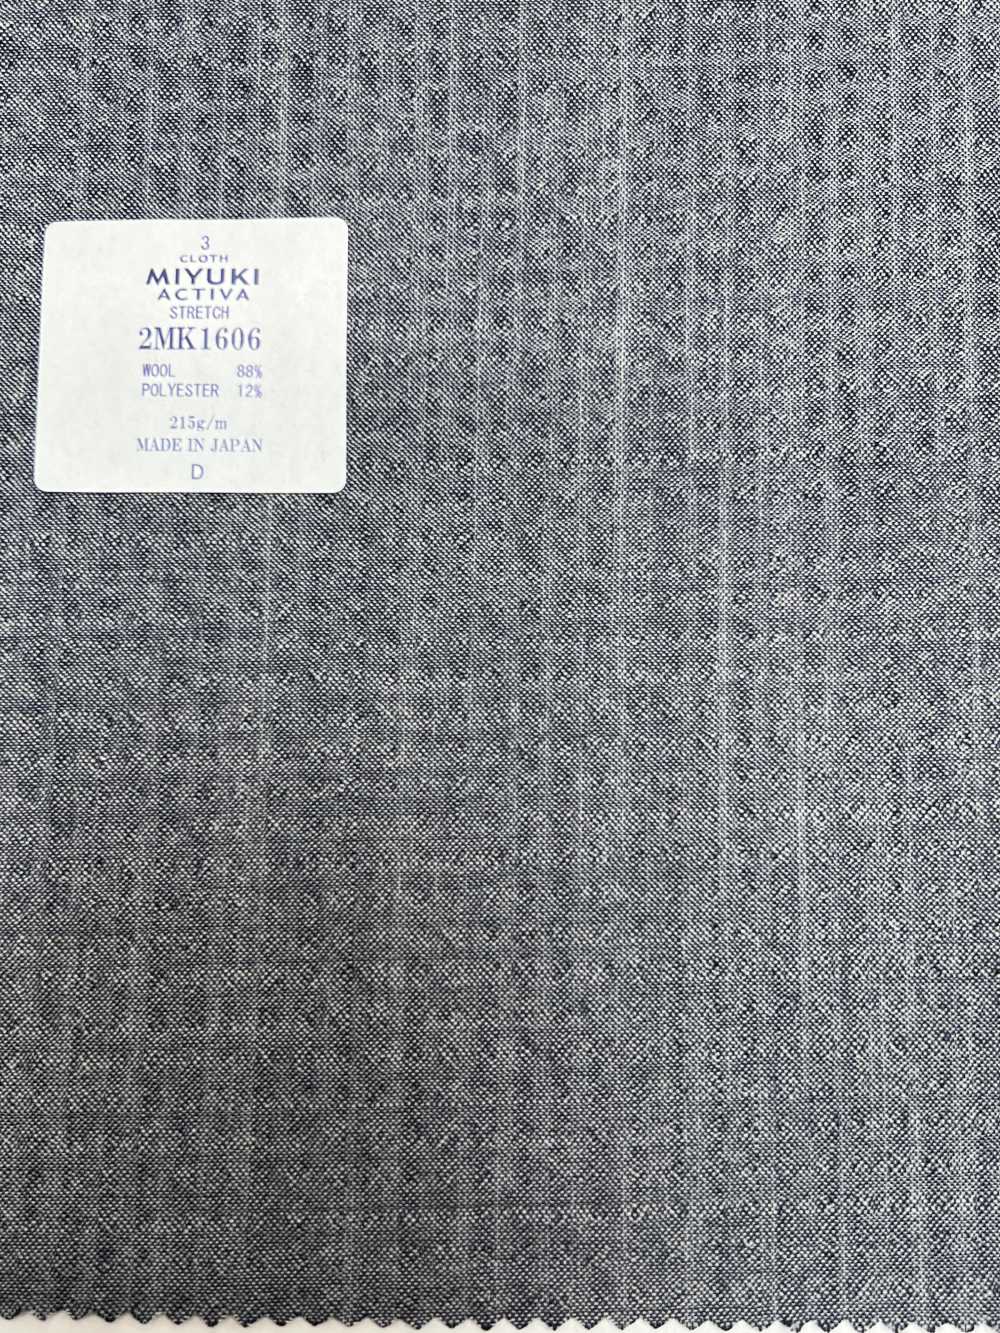 2MK1606 MIYUKI COMFORT ACTIVA STRETCH Pale Blue[Textile] Miyuki Keori (Miyuki)